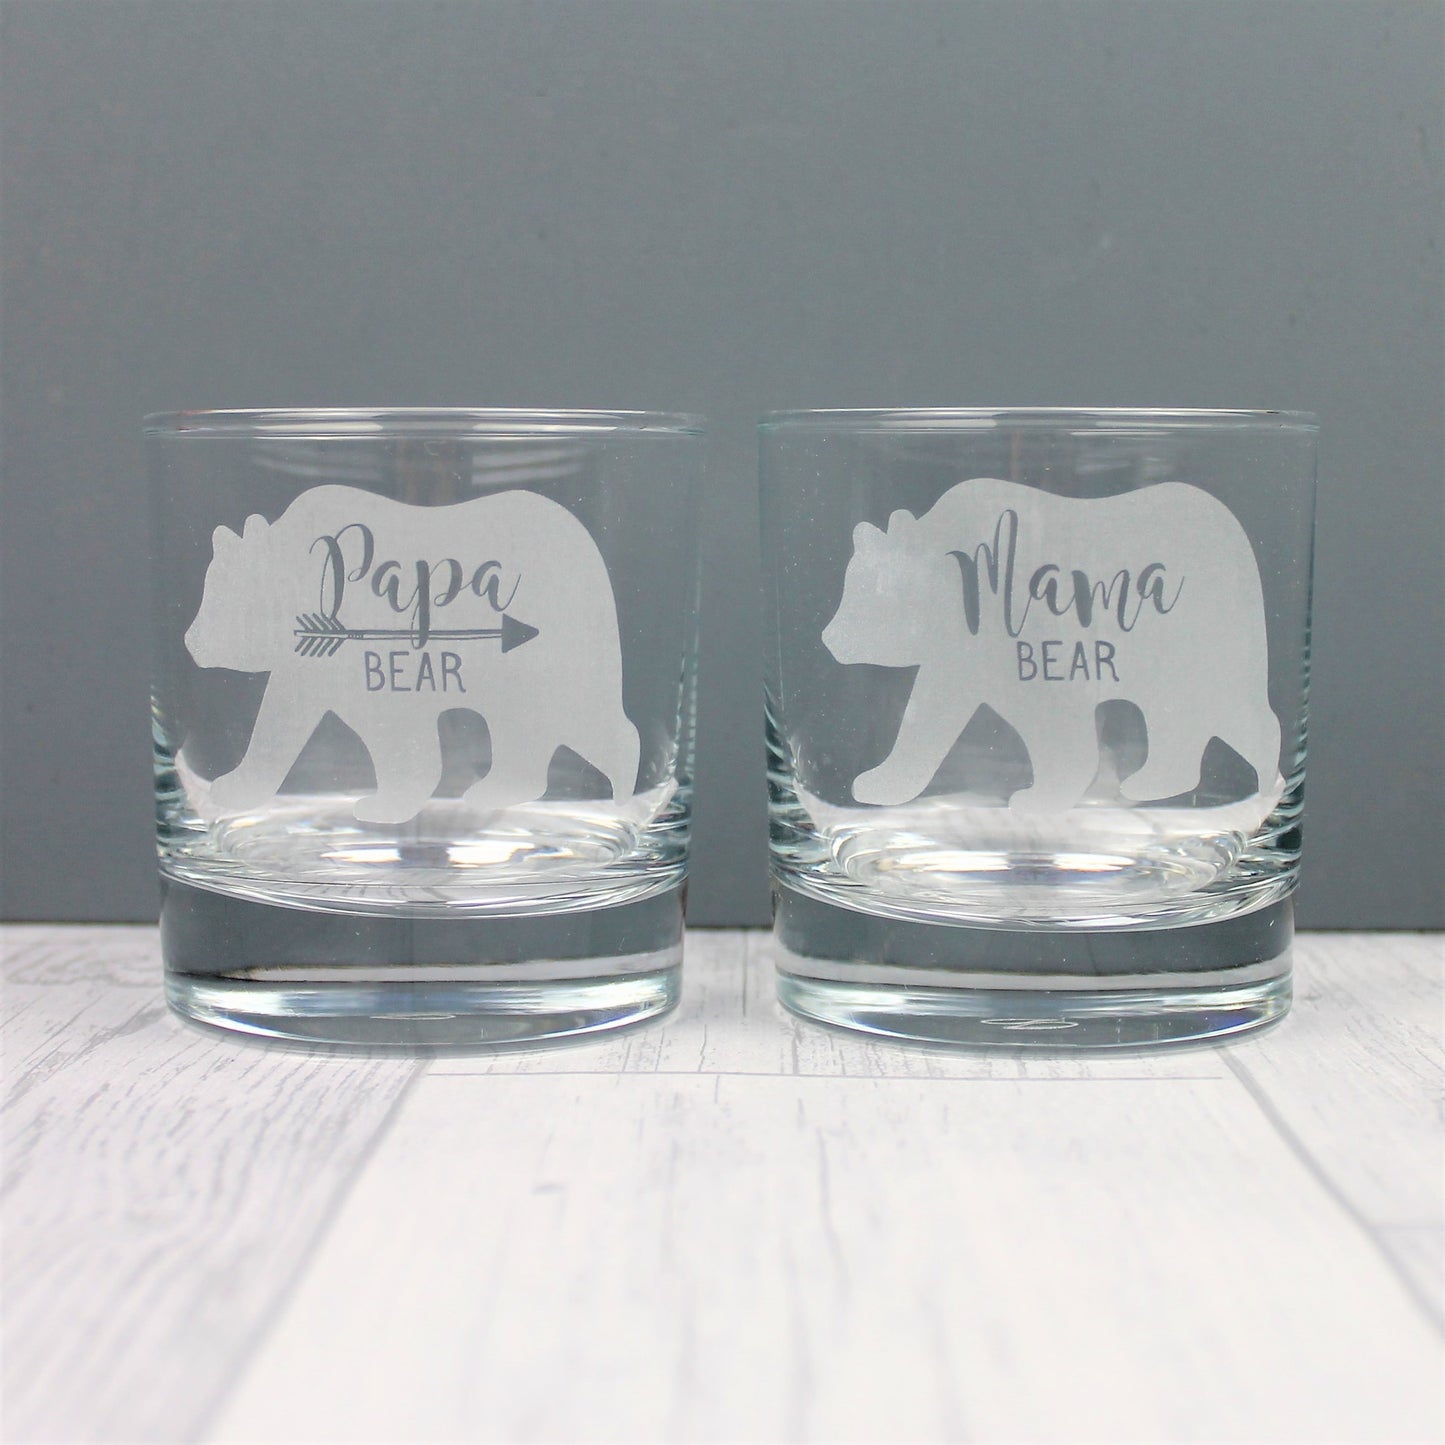 Mama and Papa bear engraved whisky glass duo 